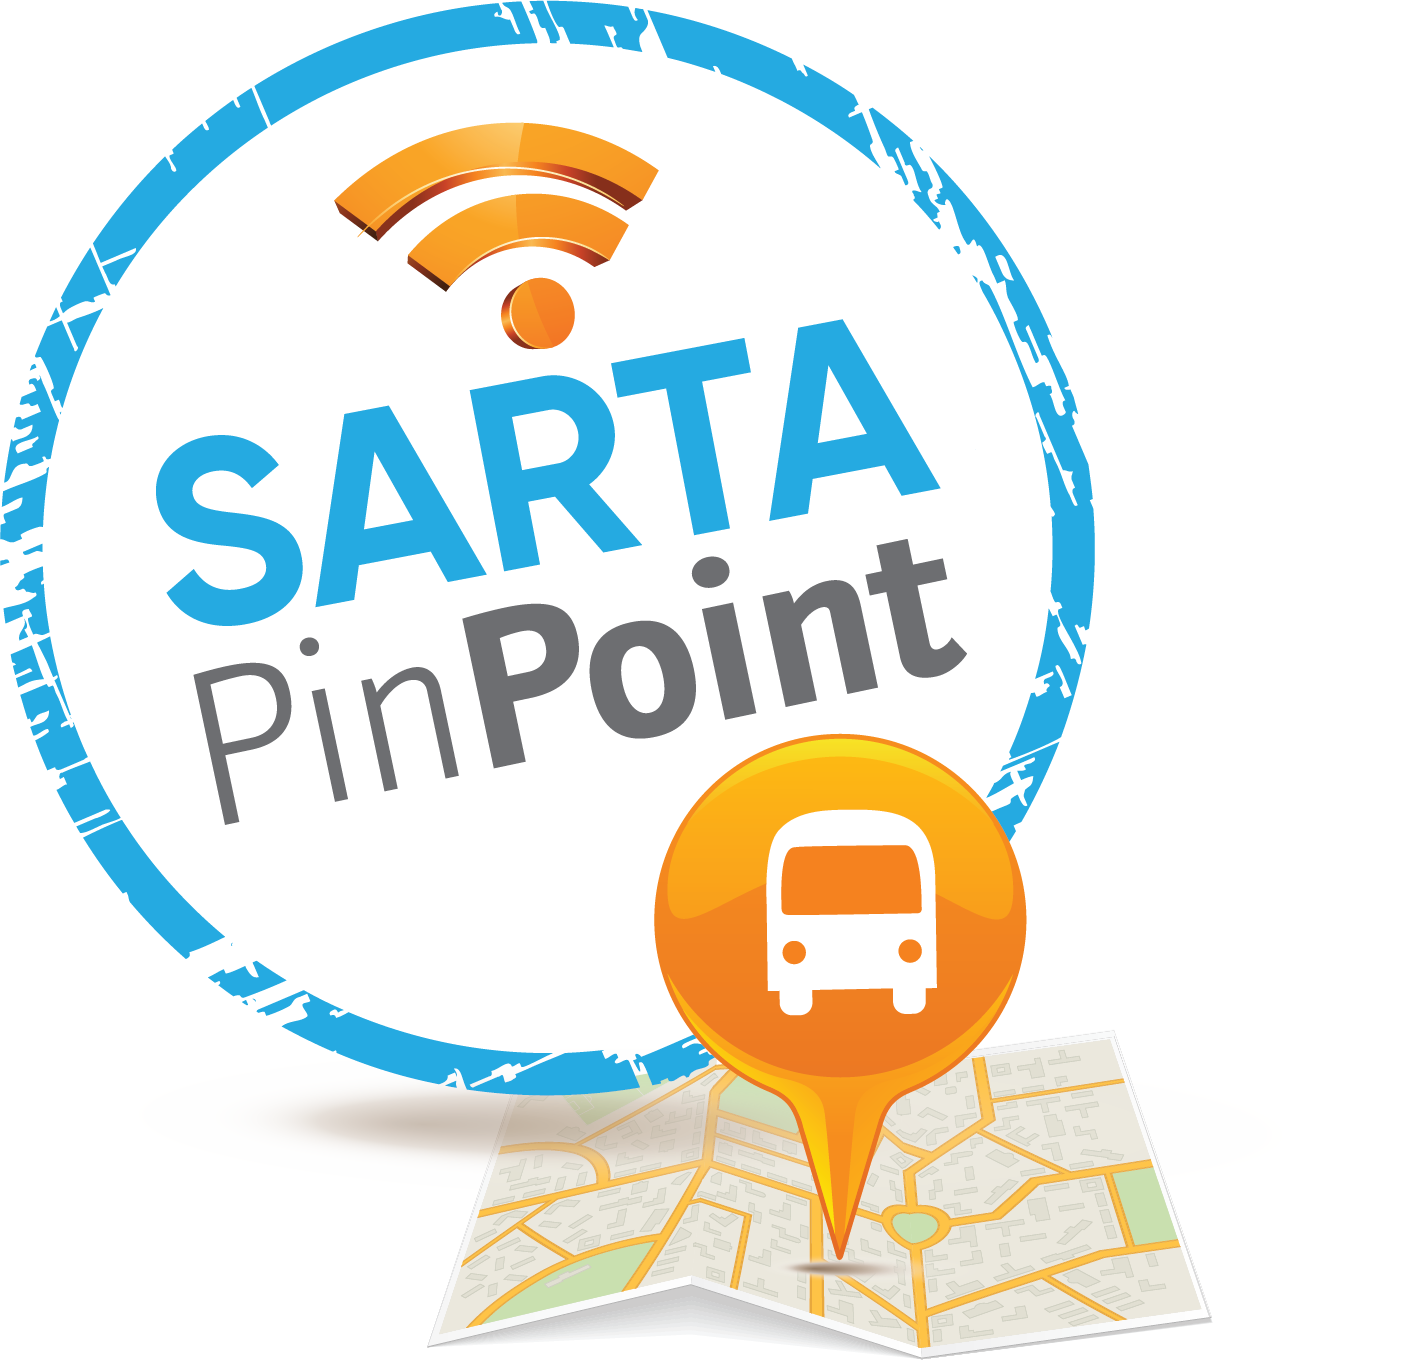 SARTA PinPoint Logo